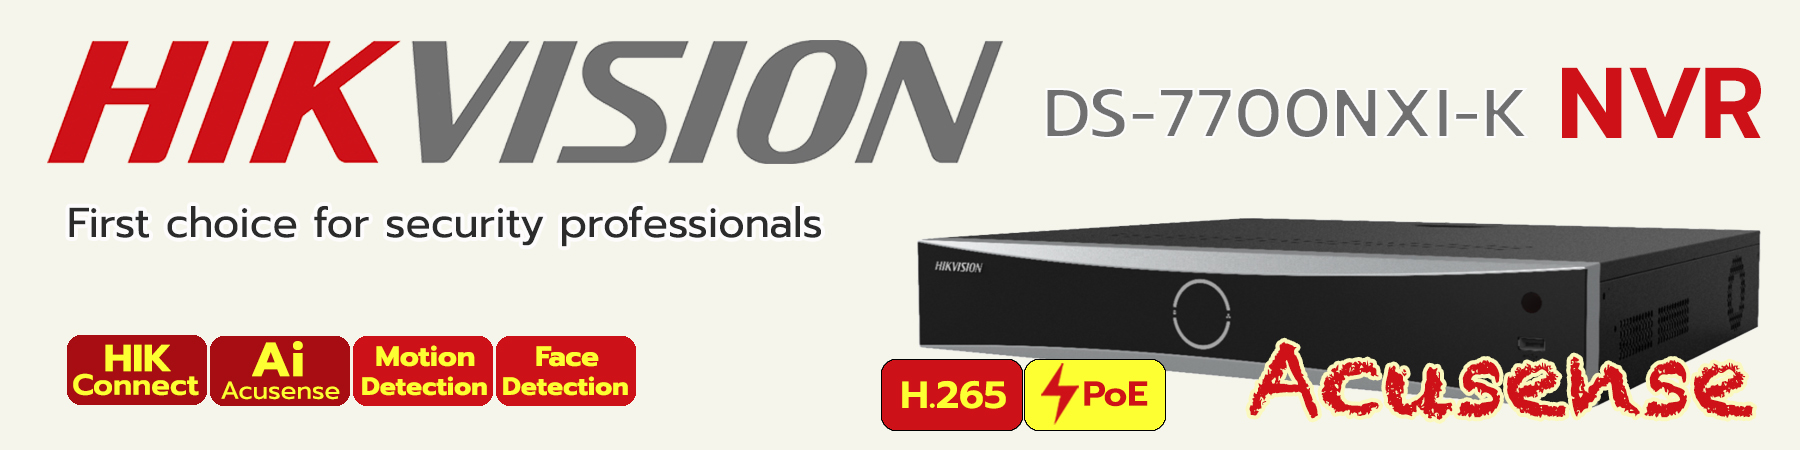 Hikvision Acusense NVR, Hikvision Acusense Network Video Recorder, DS-7716NXI-K4, DS-7716NXI-K4/16P, DS-7732NXI-K4, DS-7732NXI-K4/16P